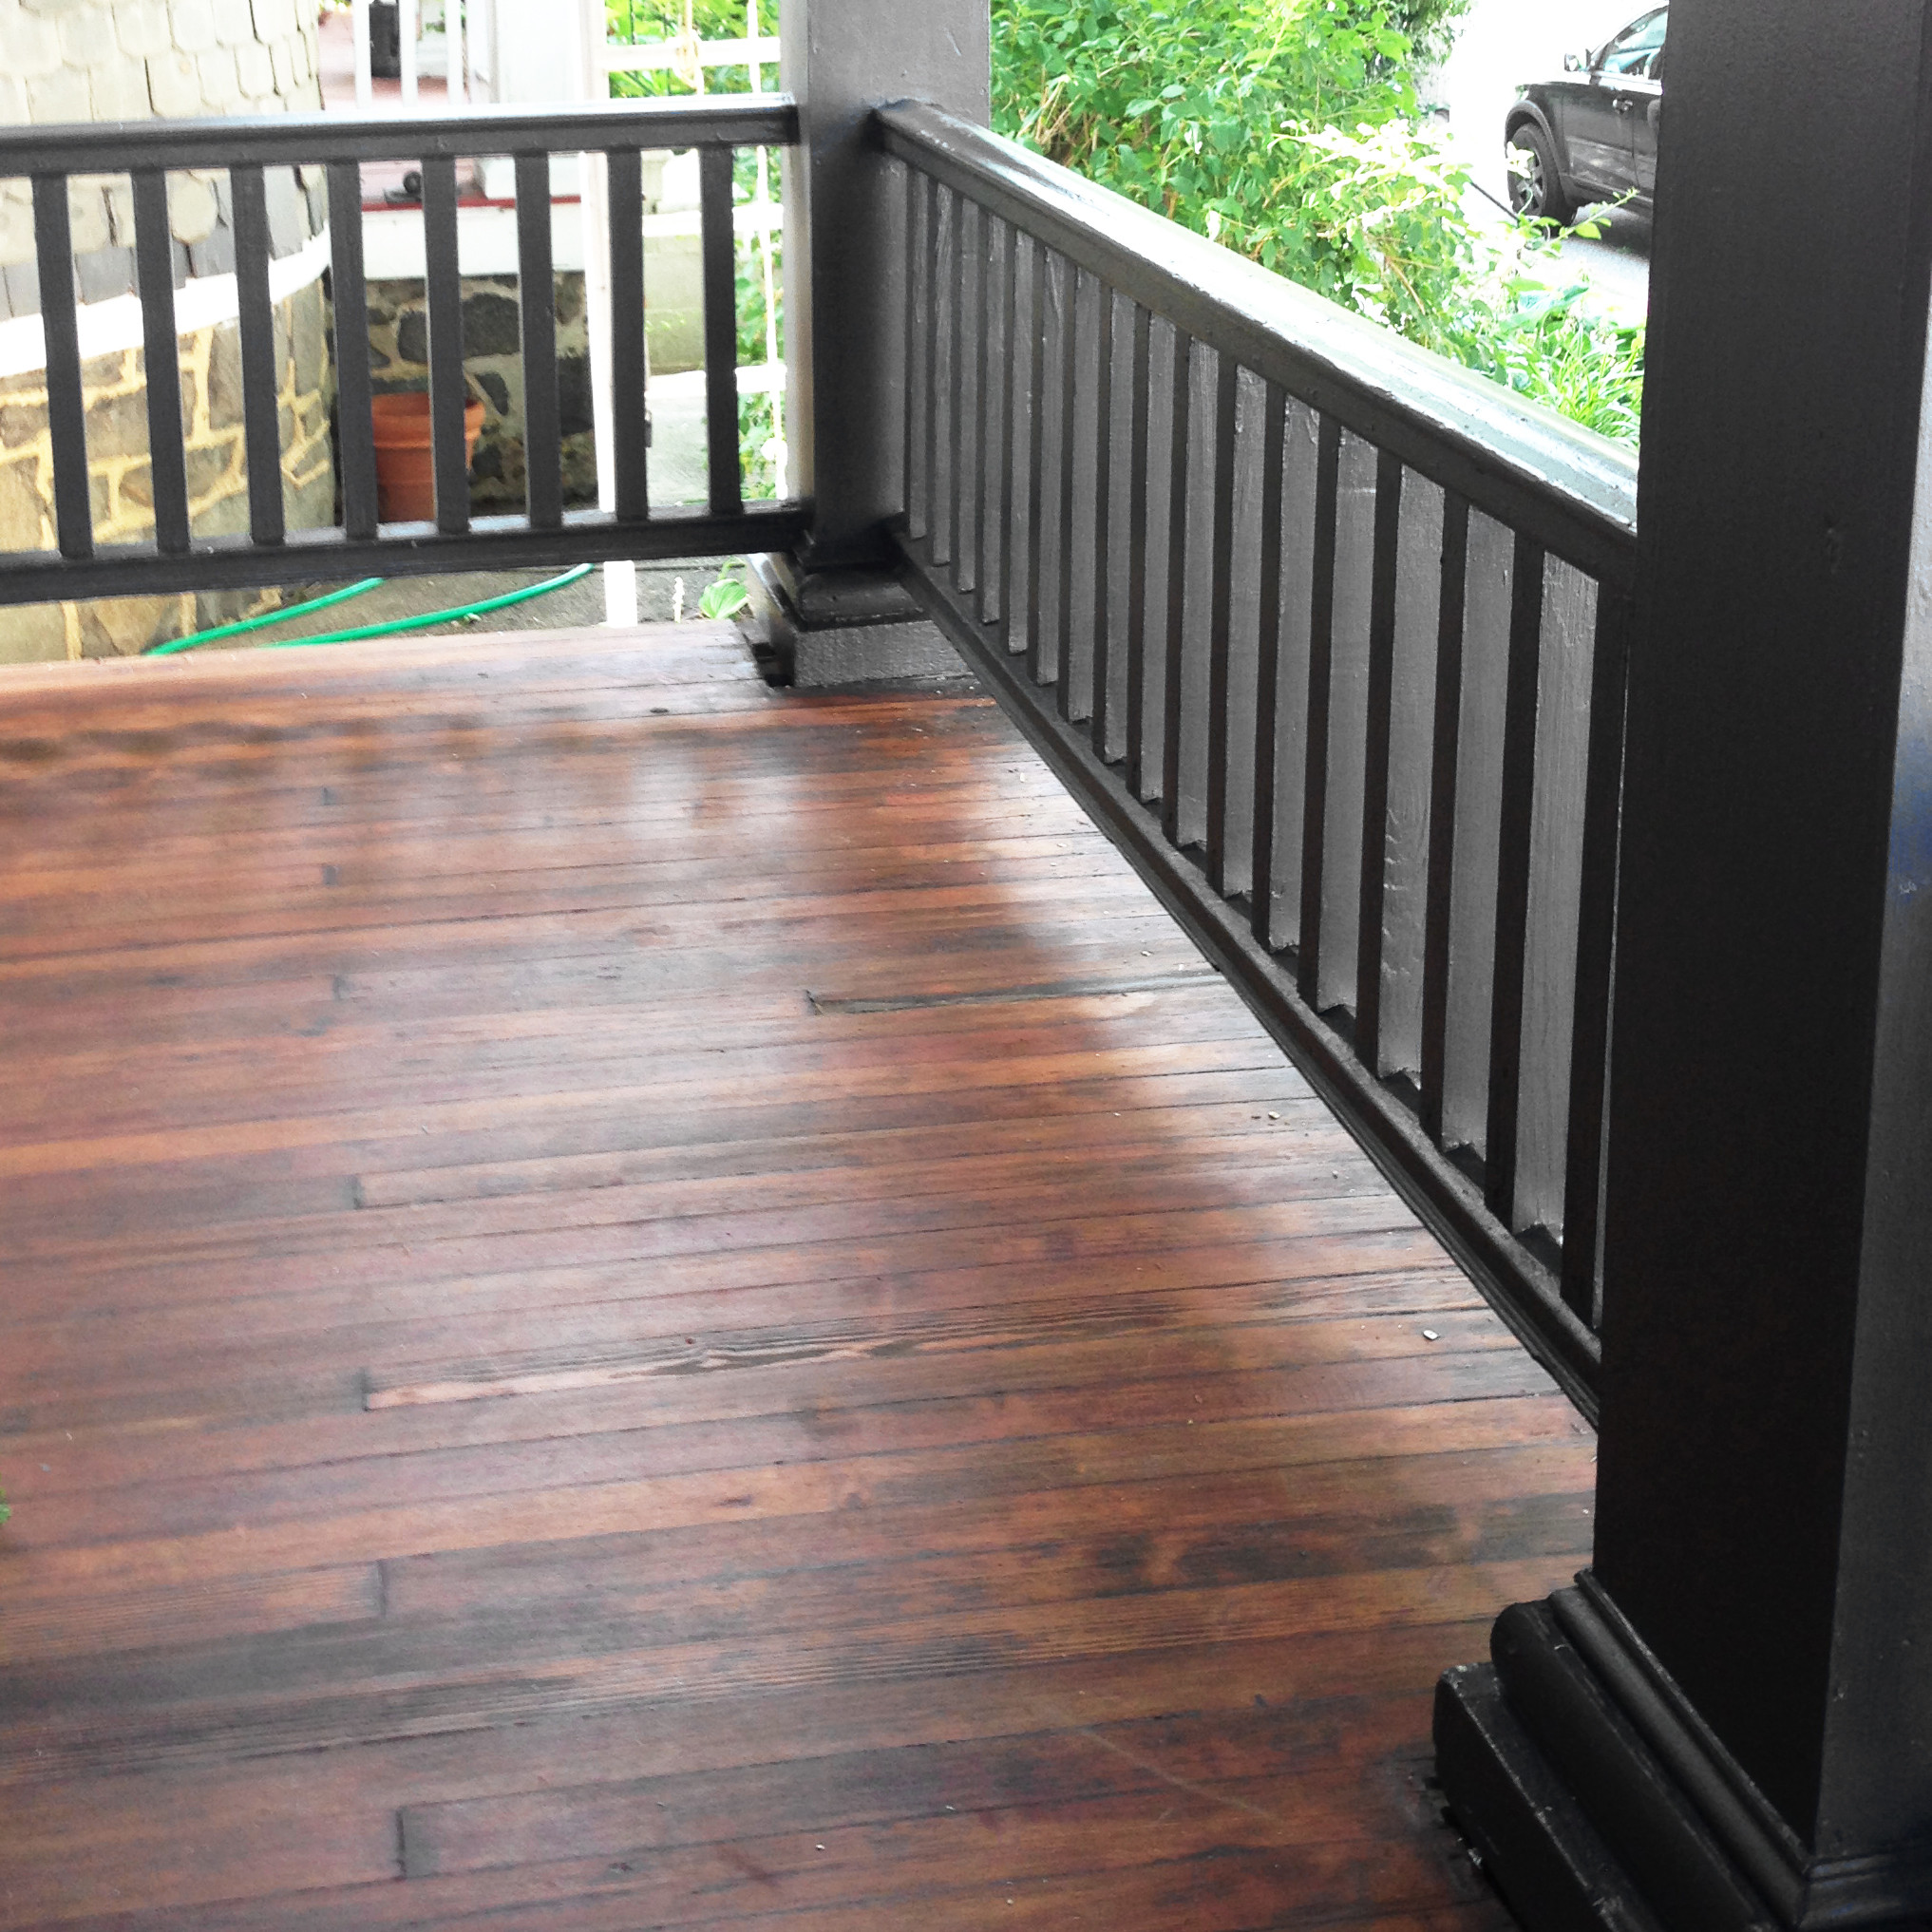 Painted Deck Ideas
 DIY Remove paint & Refinish front porch wood flooring